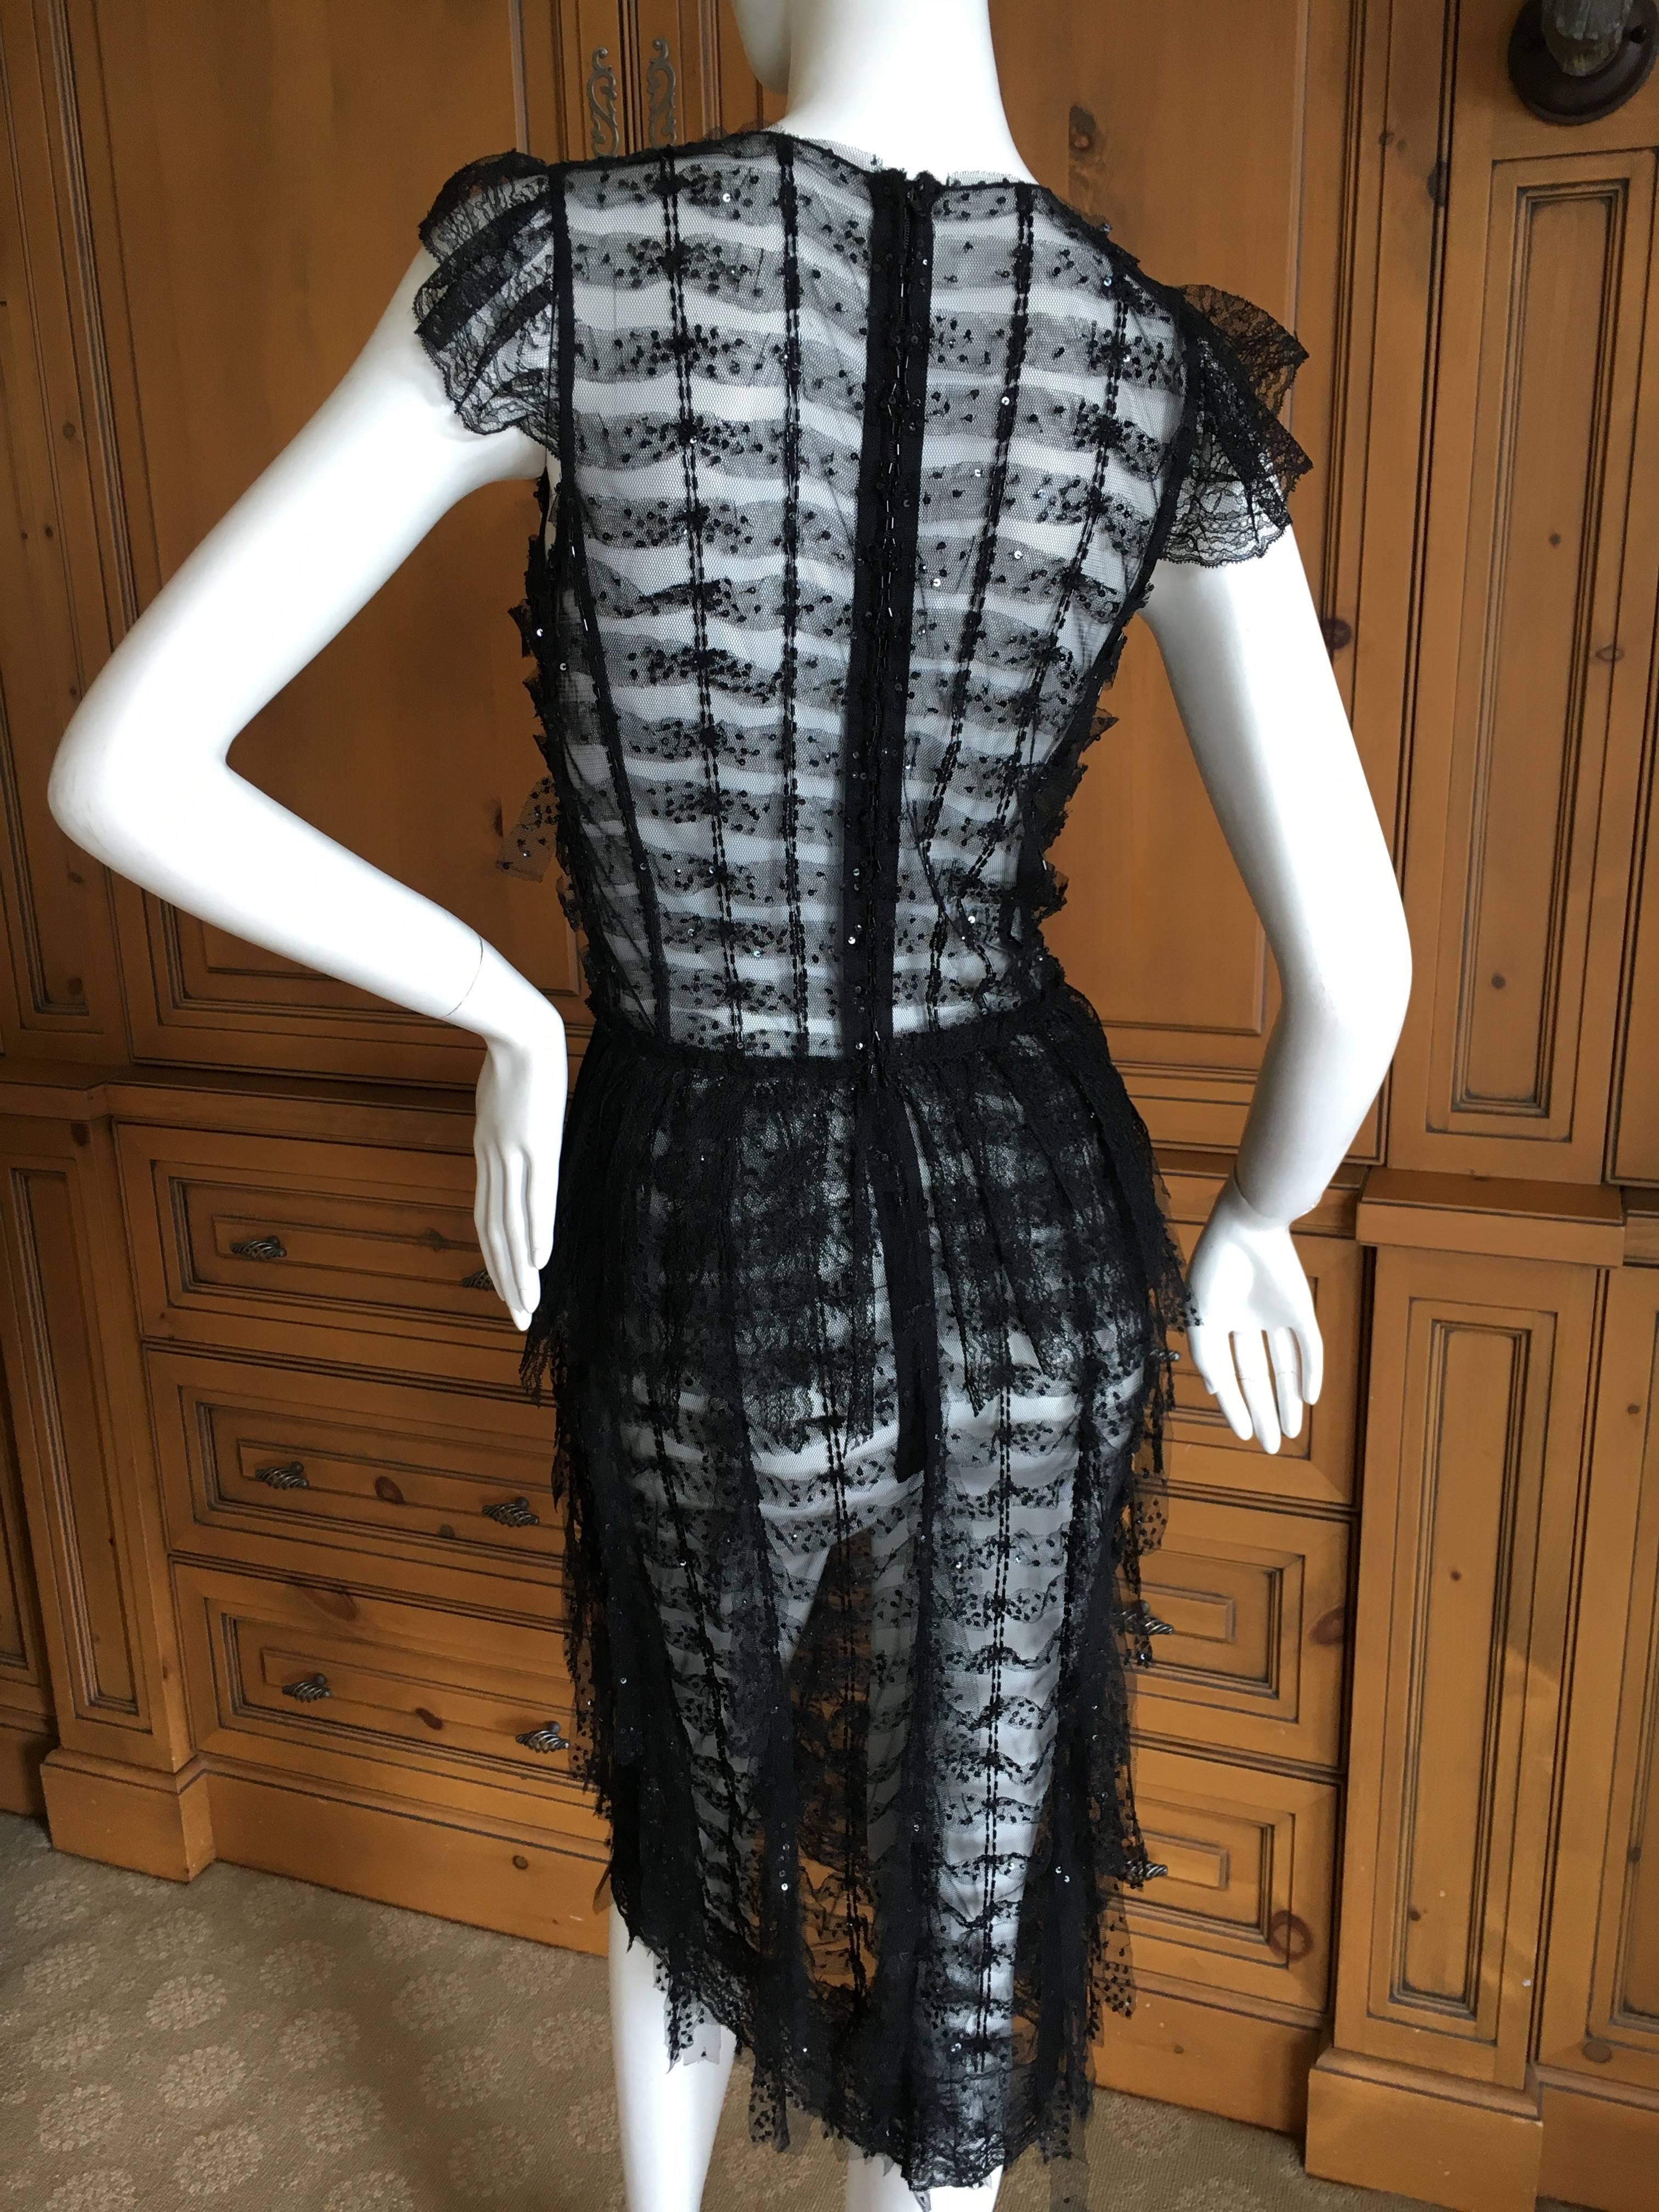 Oscar de la Renta Sheer Black Bugle Bead Embellished Cocktail Dress with Slip In Excellent Condition For Sale In Cloverdale, CA